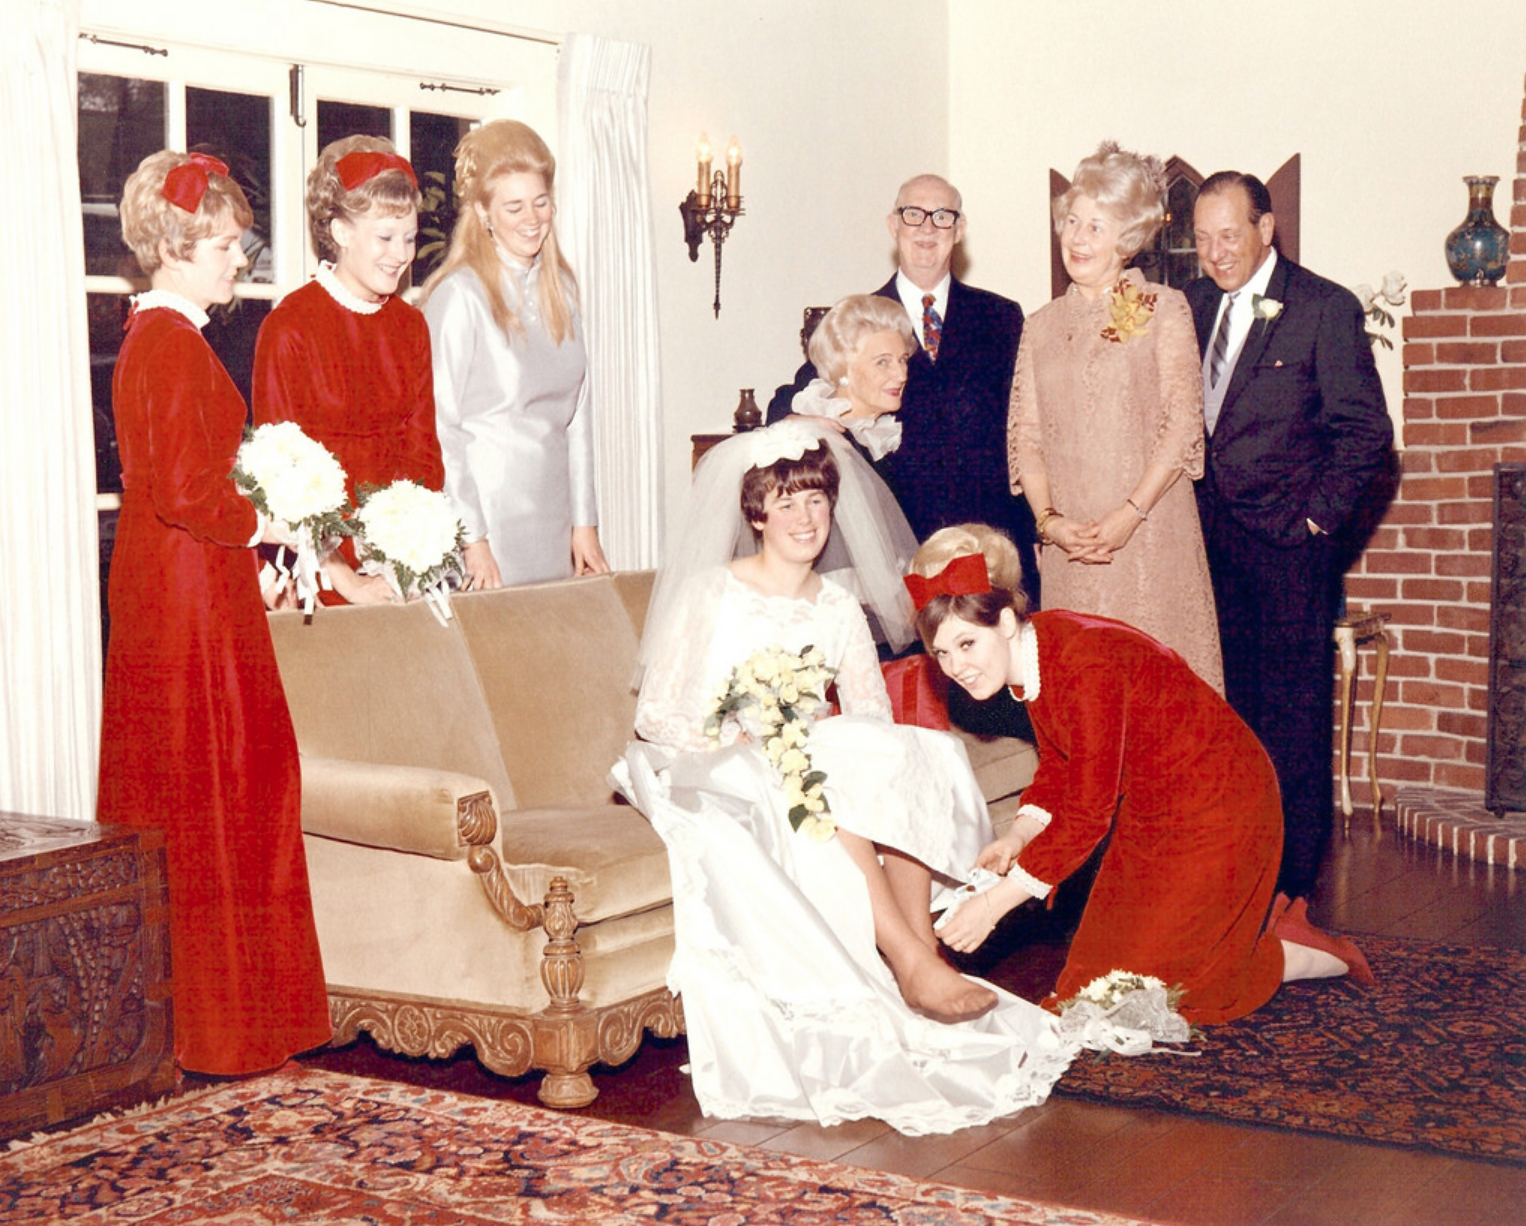 The Garter Toss: Vintage Photographs of a Wedding Tradition - Flashbak